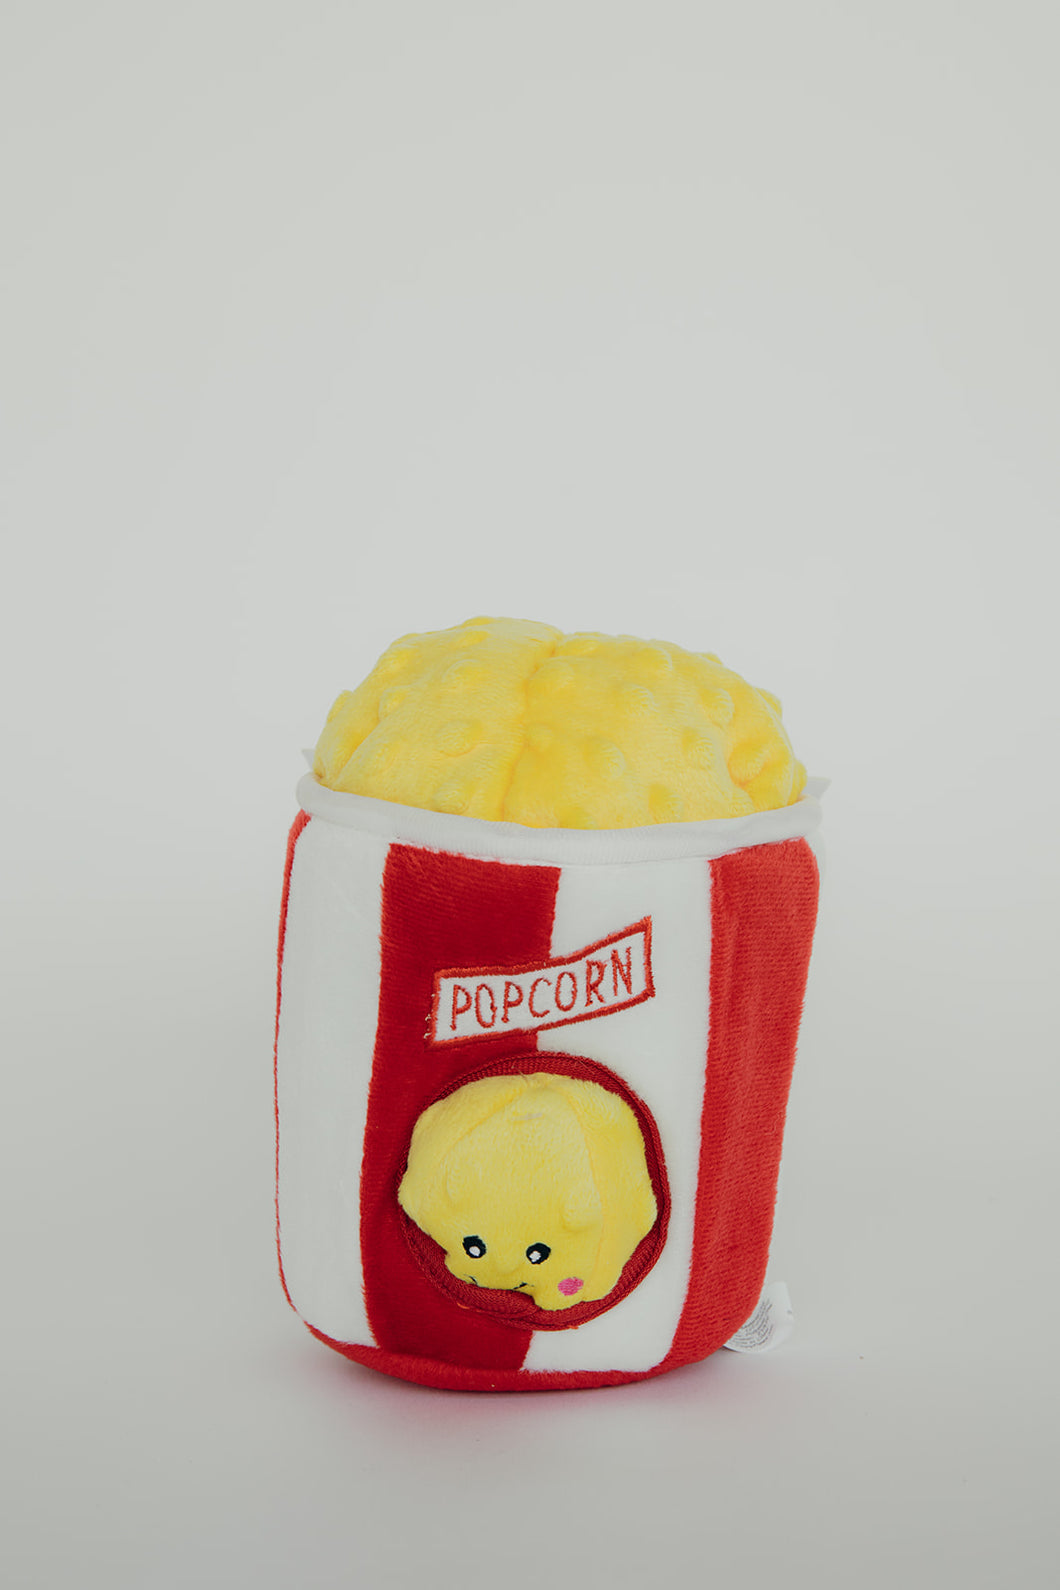 Popcorn burrow